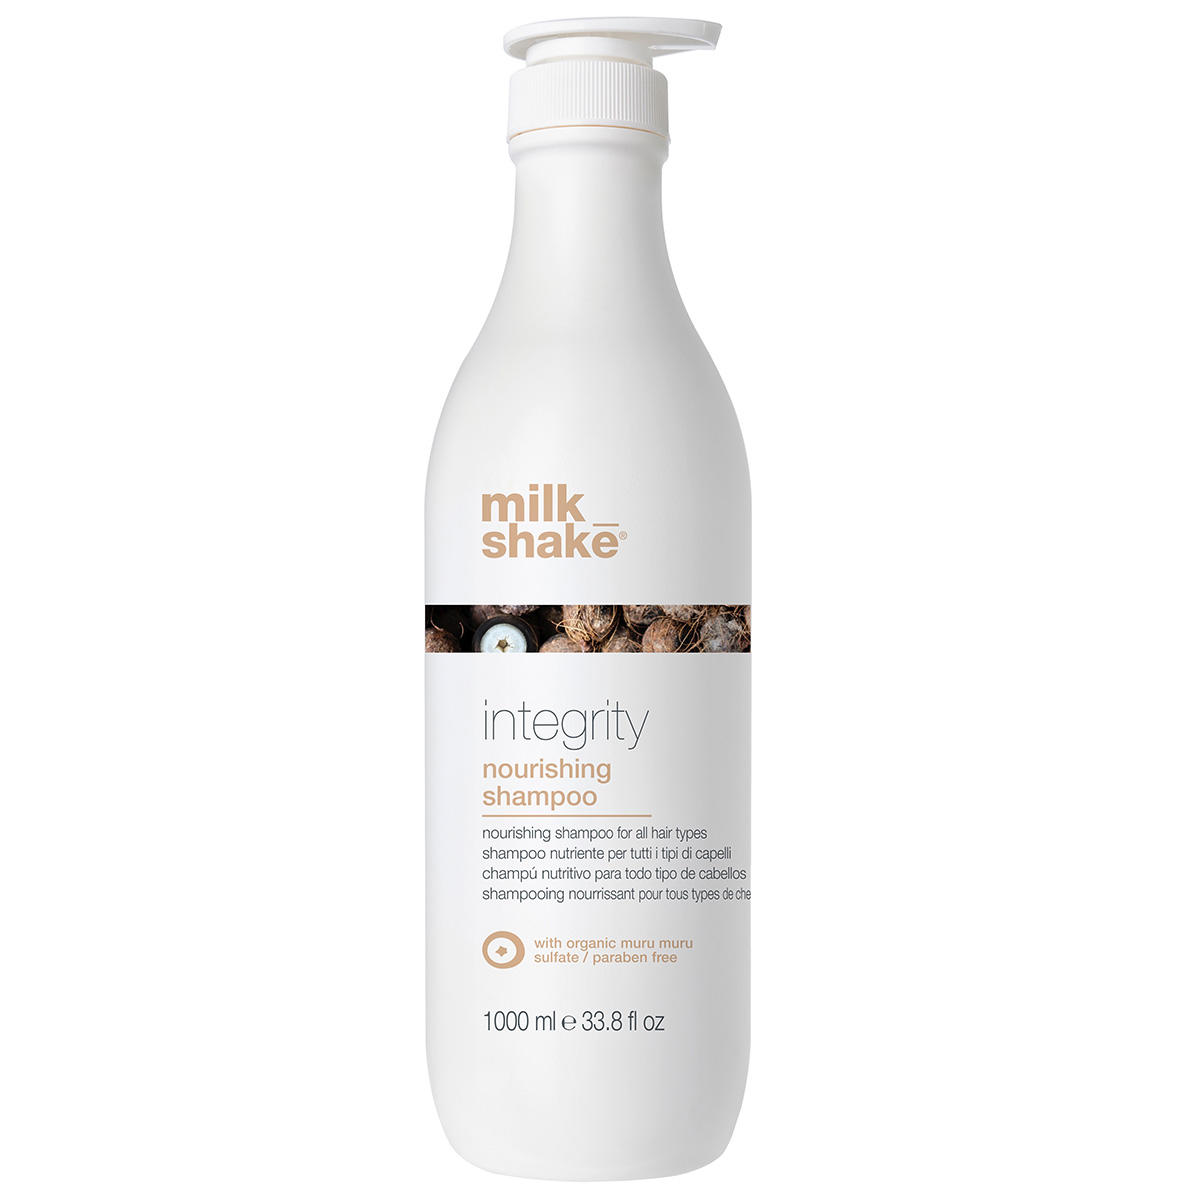 milk_shake Integrity nourishing shampoo 1 Liter - 1